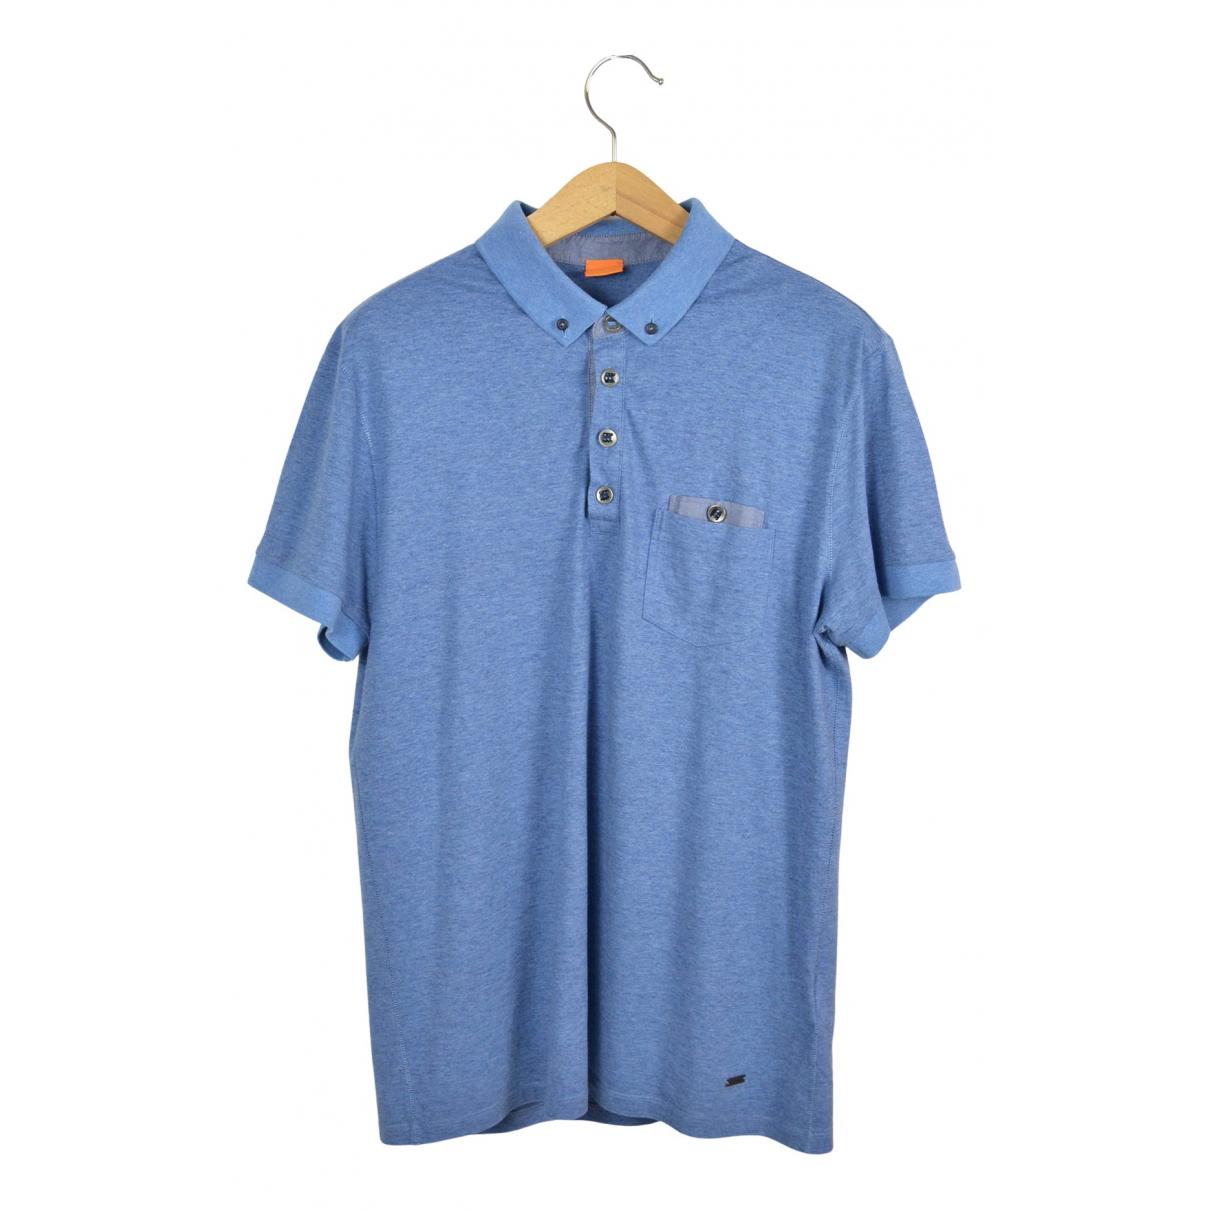 Orange Boss Blue in Polo 22881868 - Cotton shirt size L International